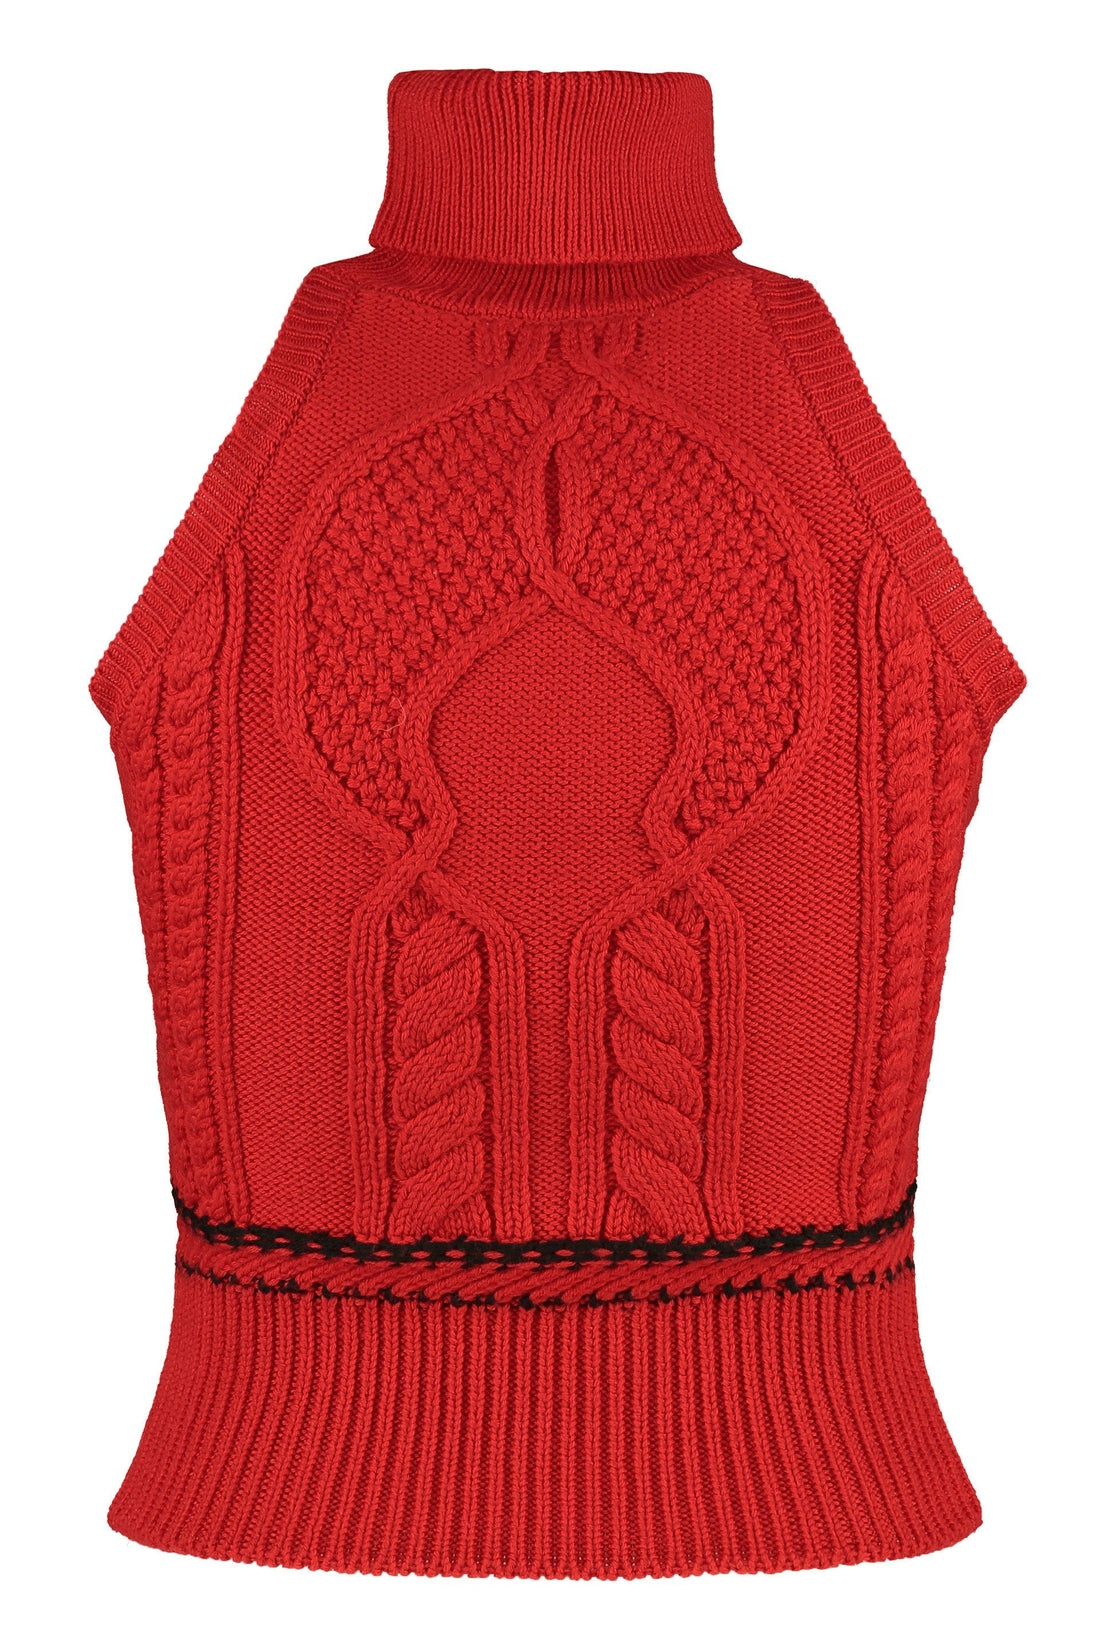 Marine Serre-OUTLET-SALE-Knitted wool vest-ARCHIVIST